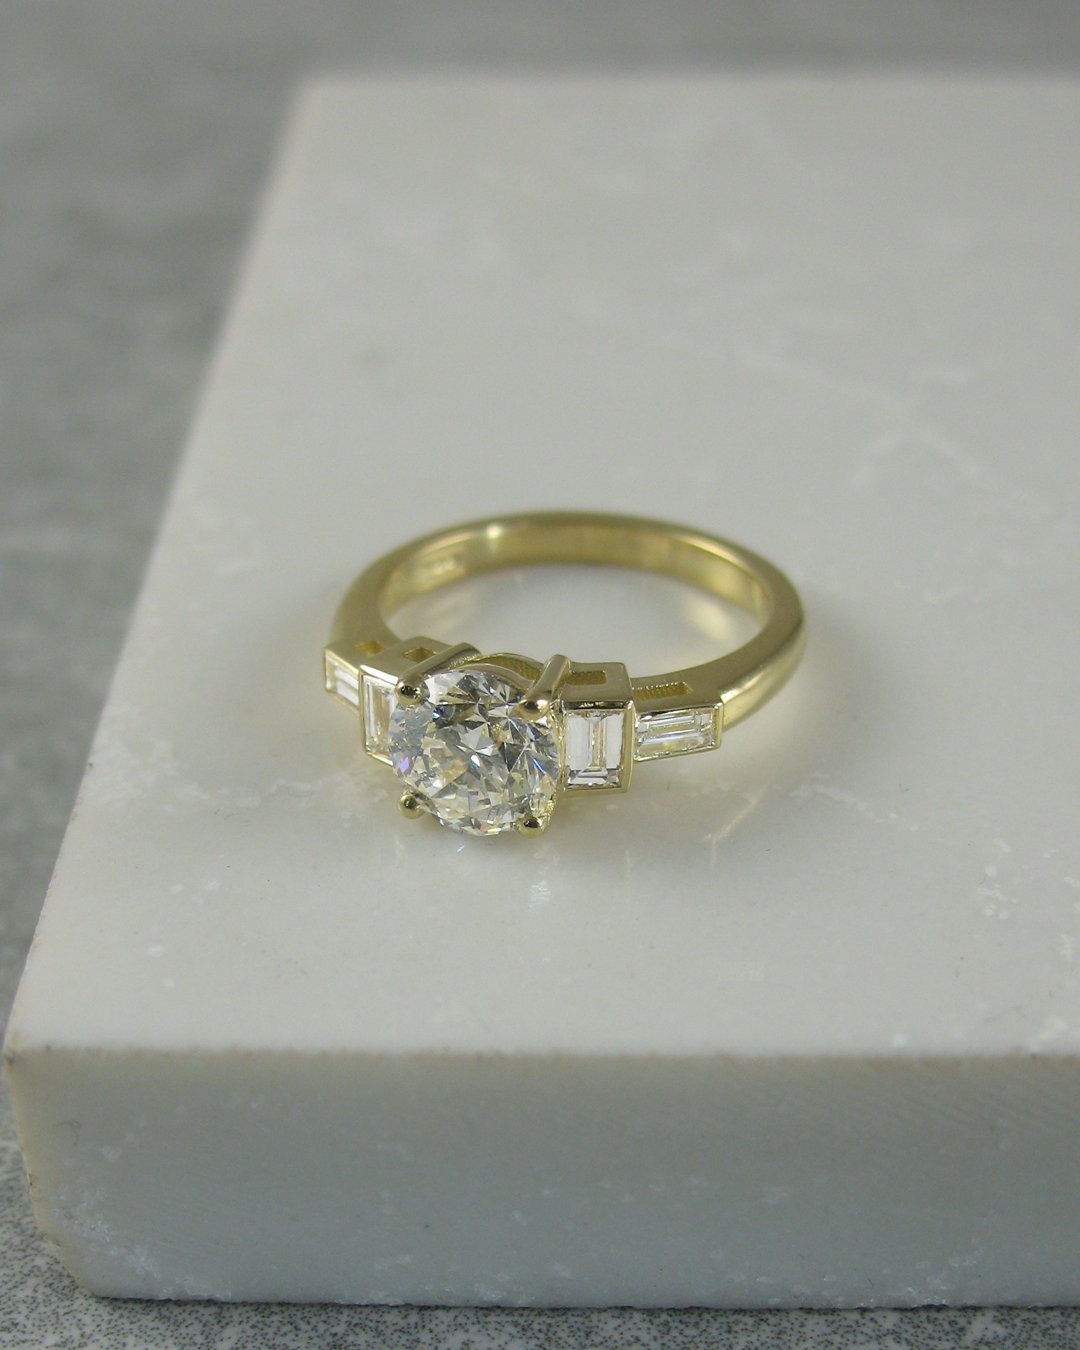 A modern geometric shaped diamond engagement ring